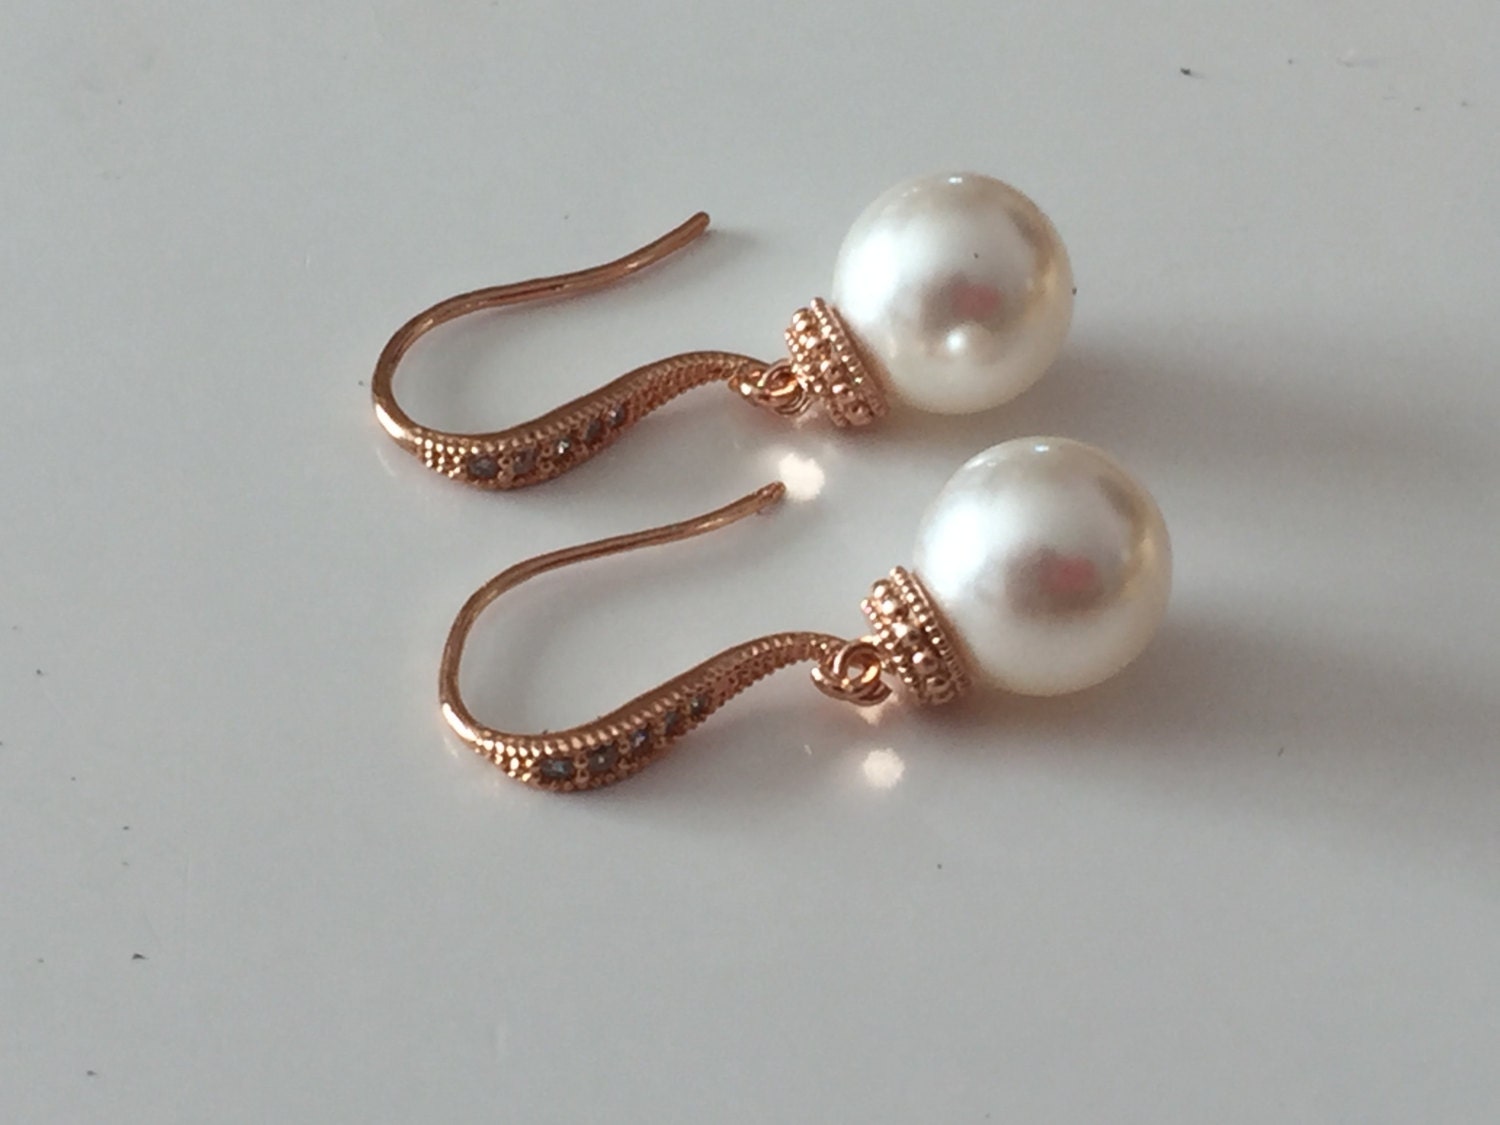 4 or more discounted for weddings pearl earrings, wedding jewelry, dangle earrings, bridesmaid jewelry,  Ivory pearl earrings